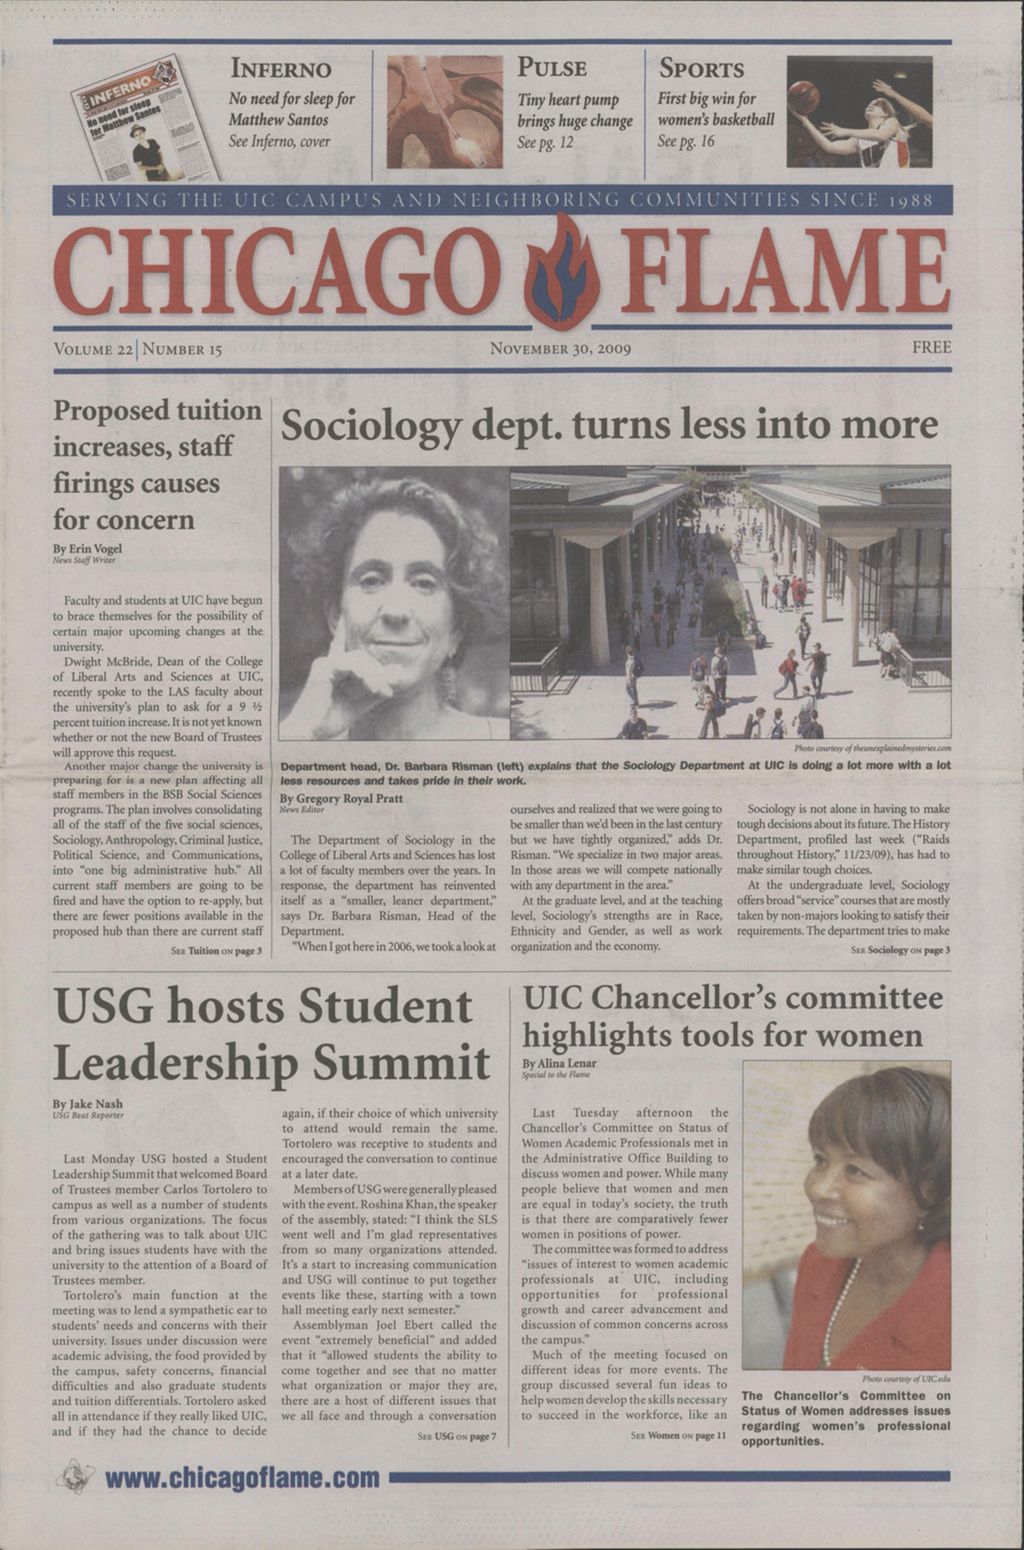 Miniature of Chicago Flame (November 30, 2009)